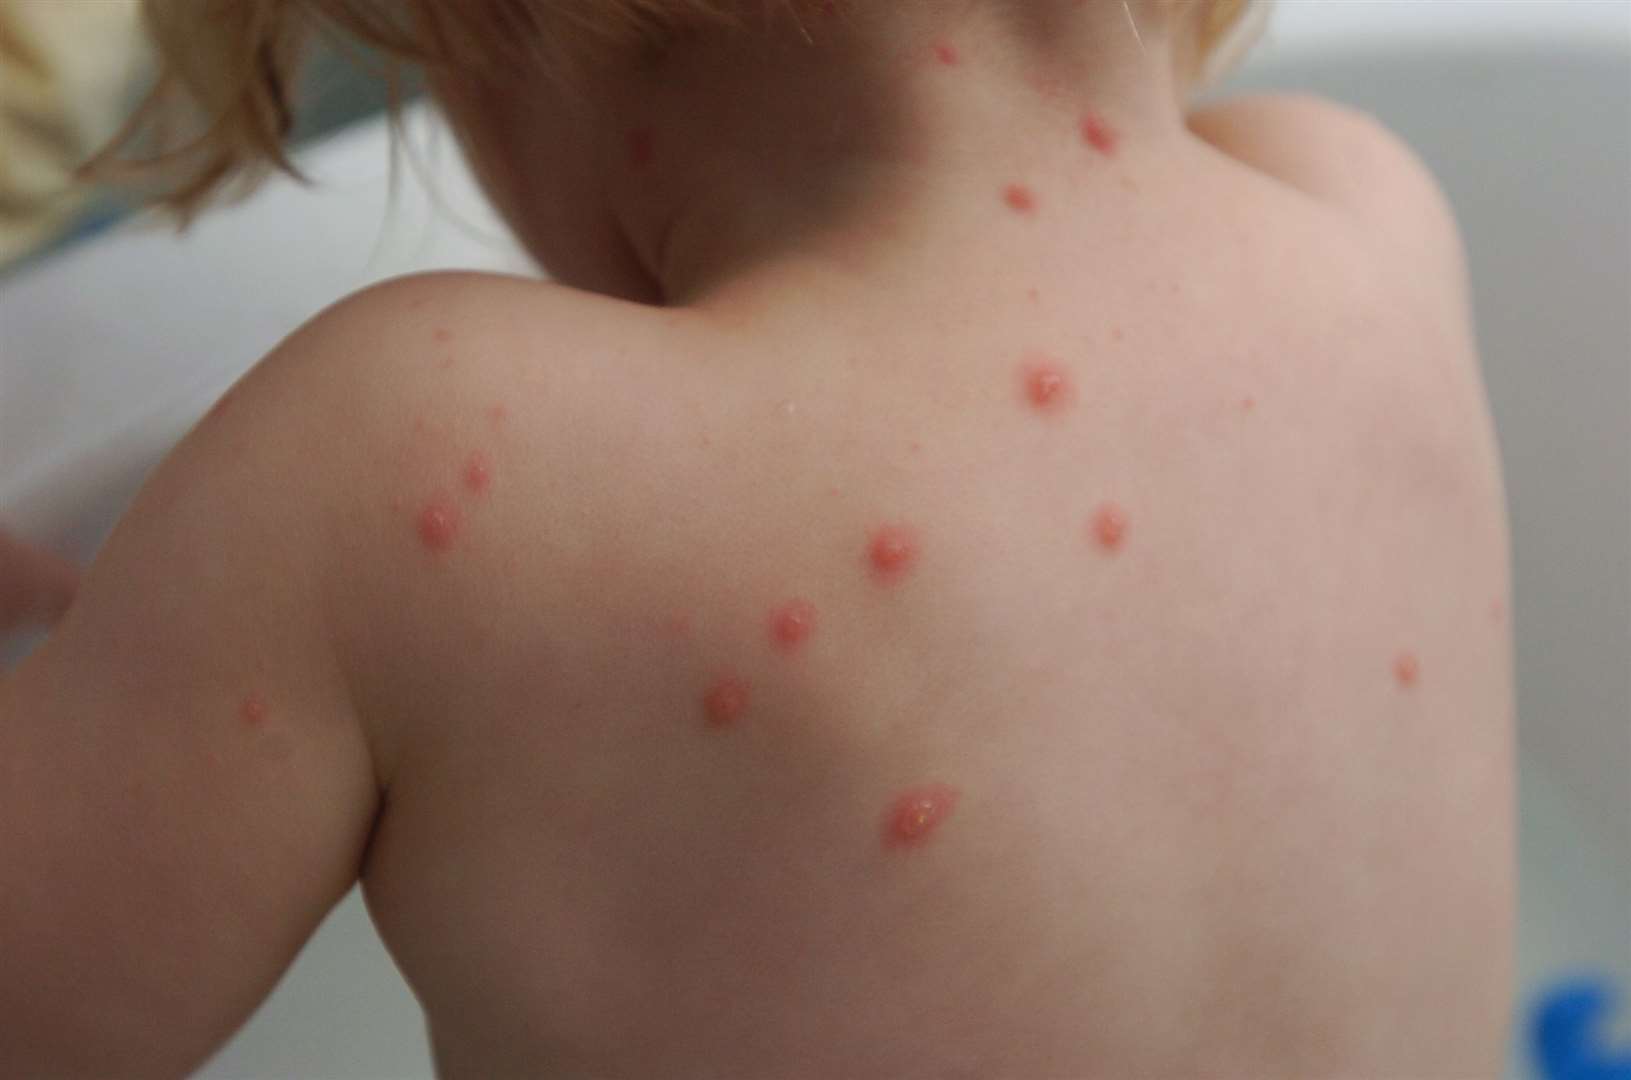 Experts now believe children should be protected against chickenpox. Image: Matt Walker.